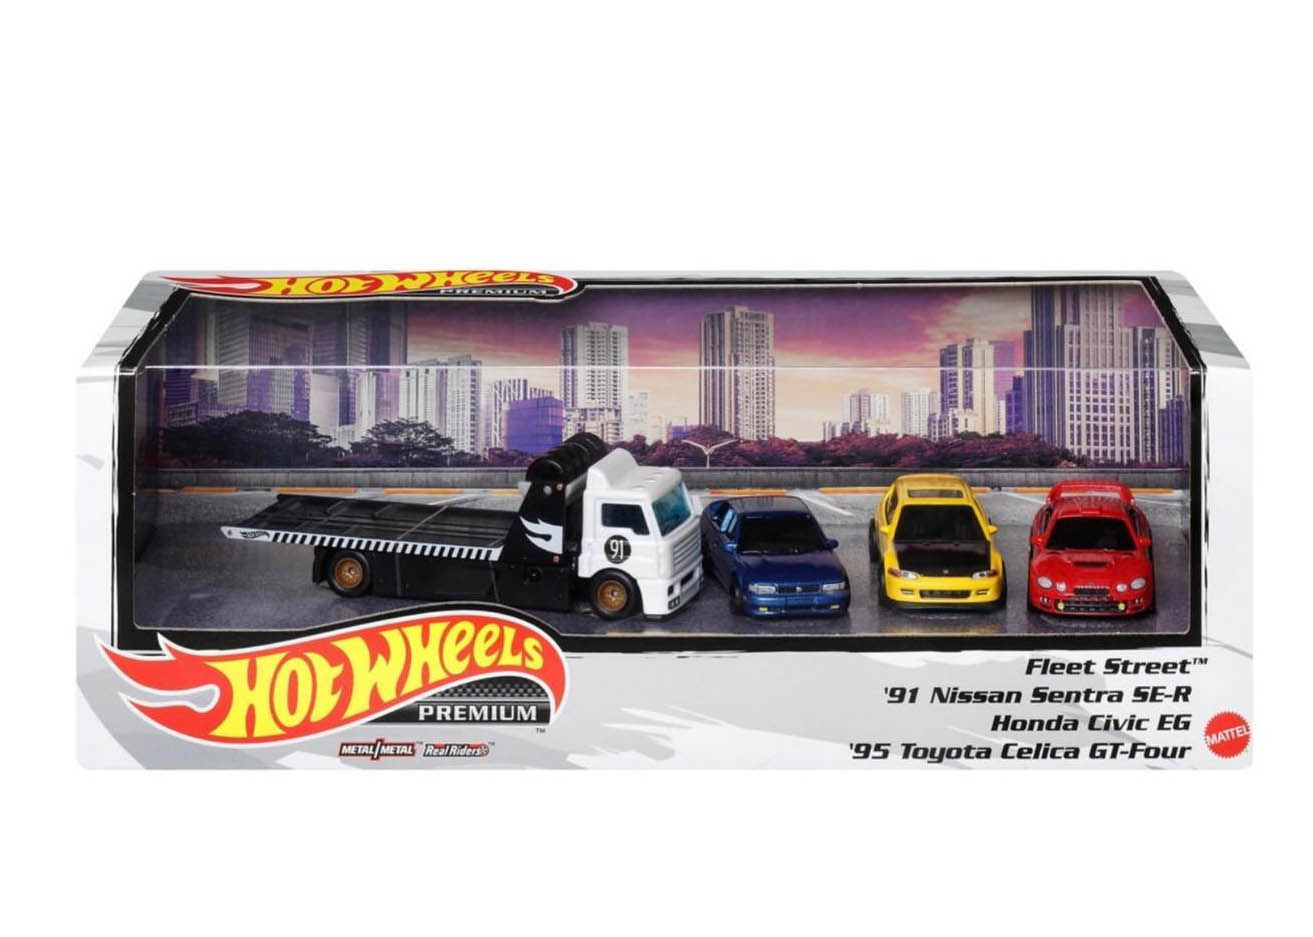 Hot Wheels Premium Diorama Boxset - US